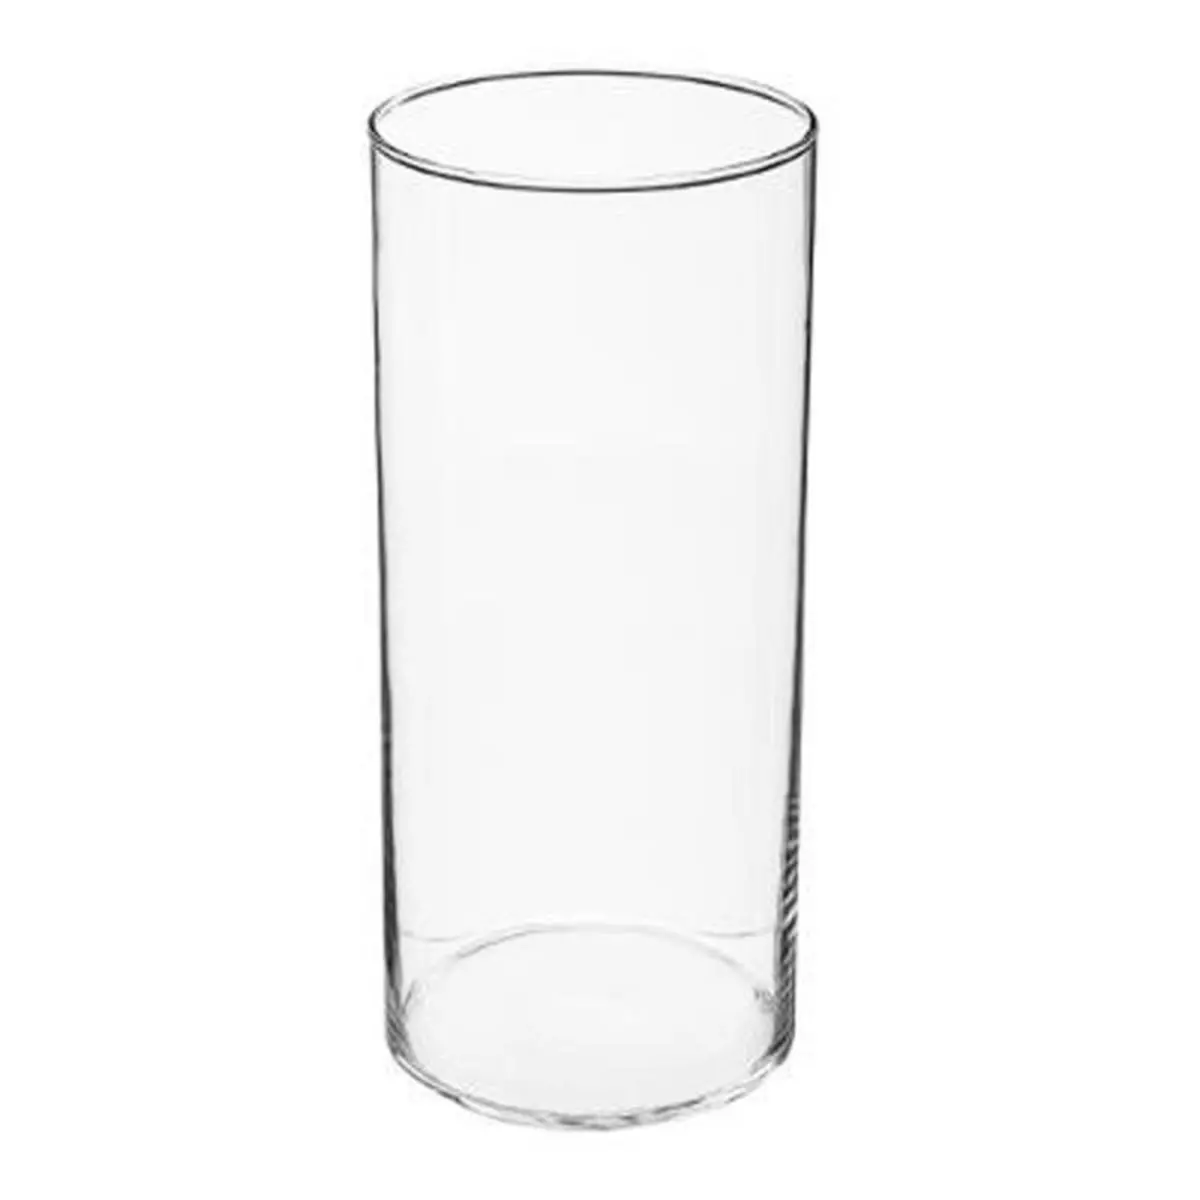  Vase Cylindrique en Verre 30cm Transparent